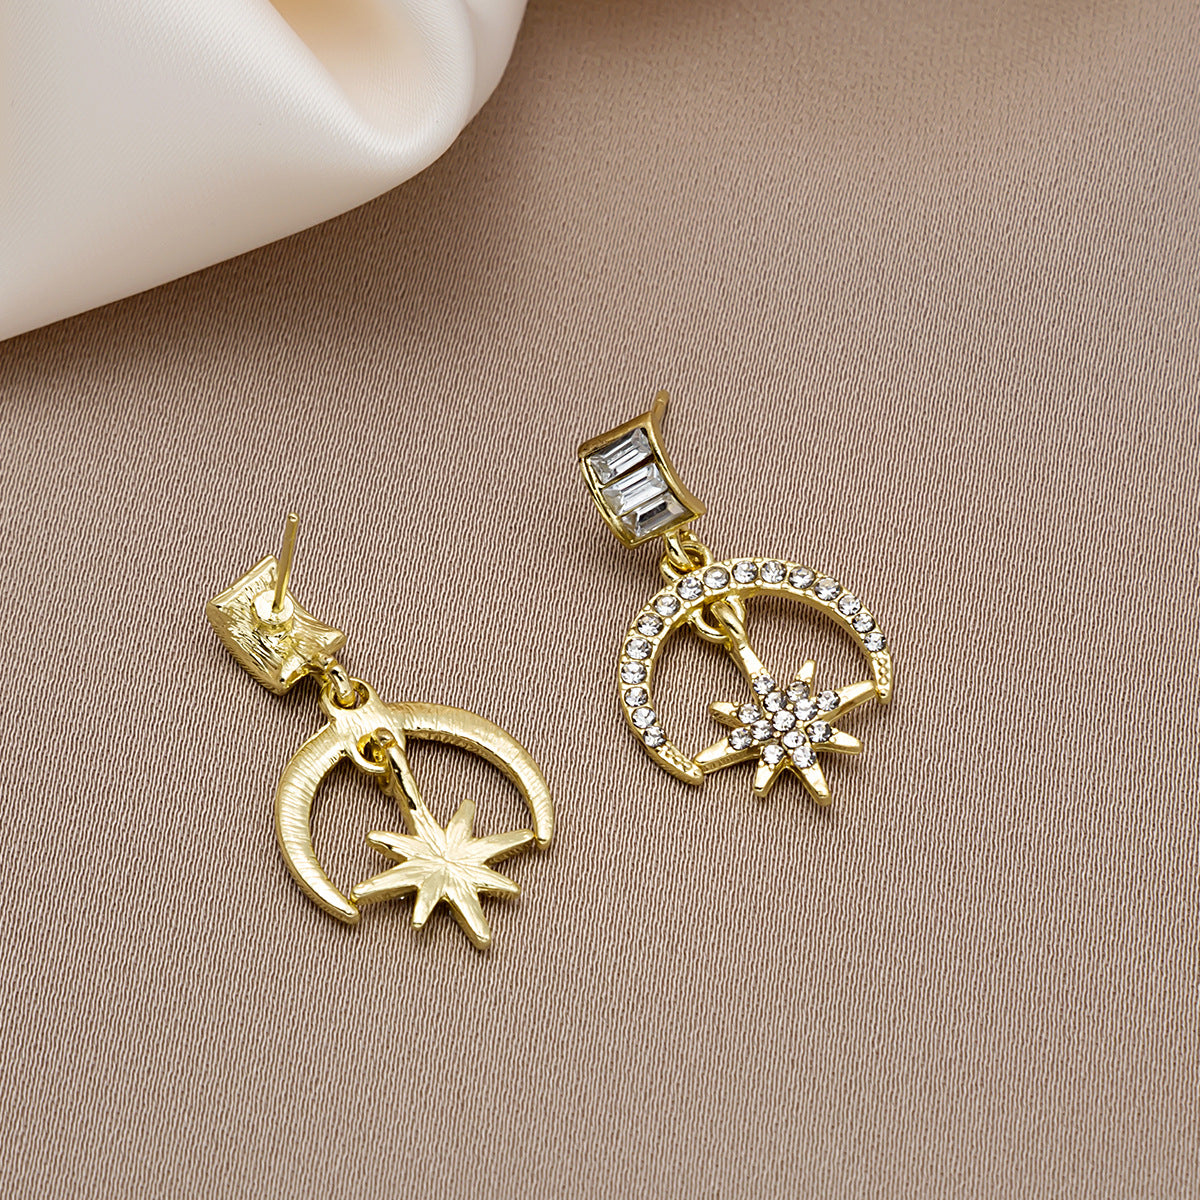 Cubic Zirconia & 18K Gold-Plated Moon Star Drop Earrings